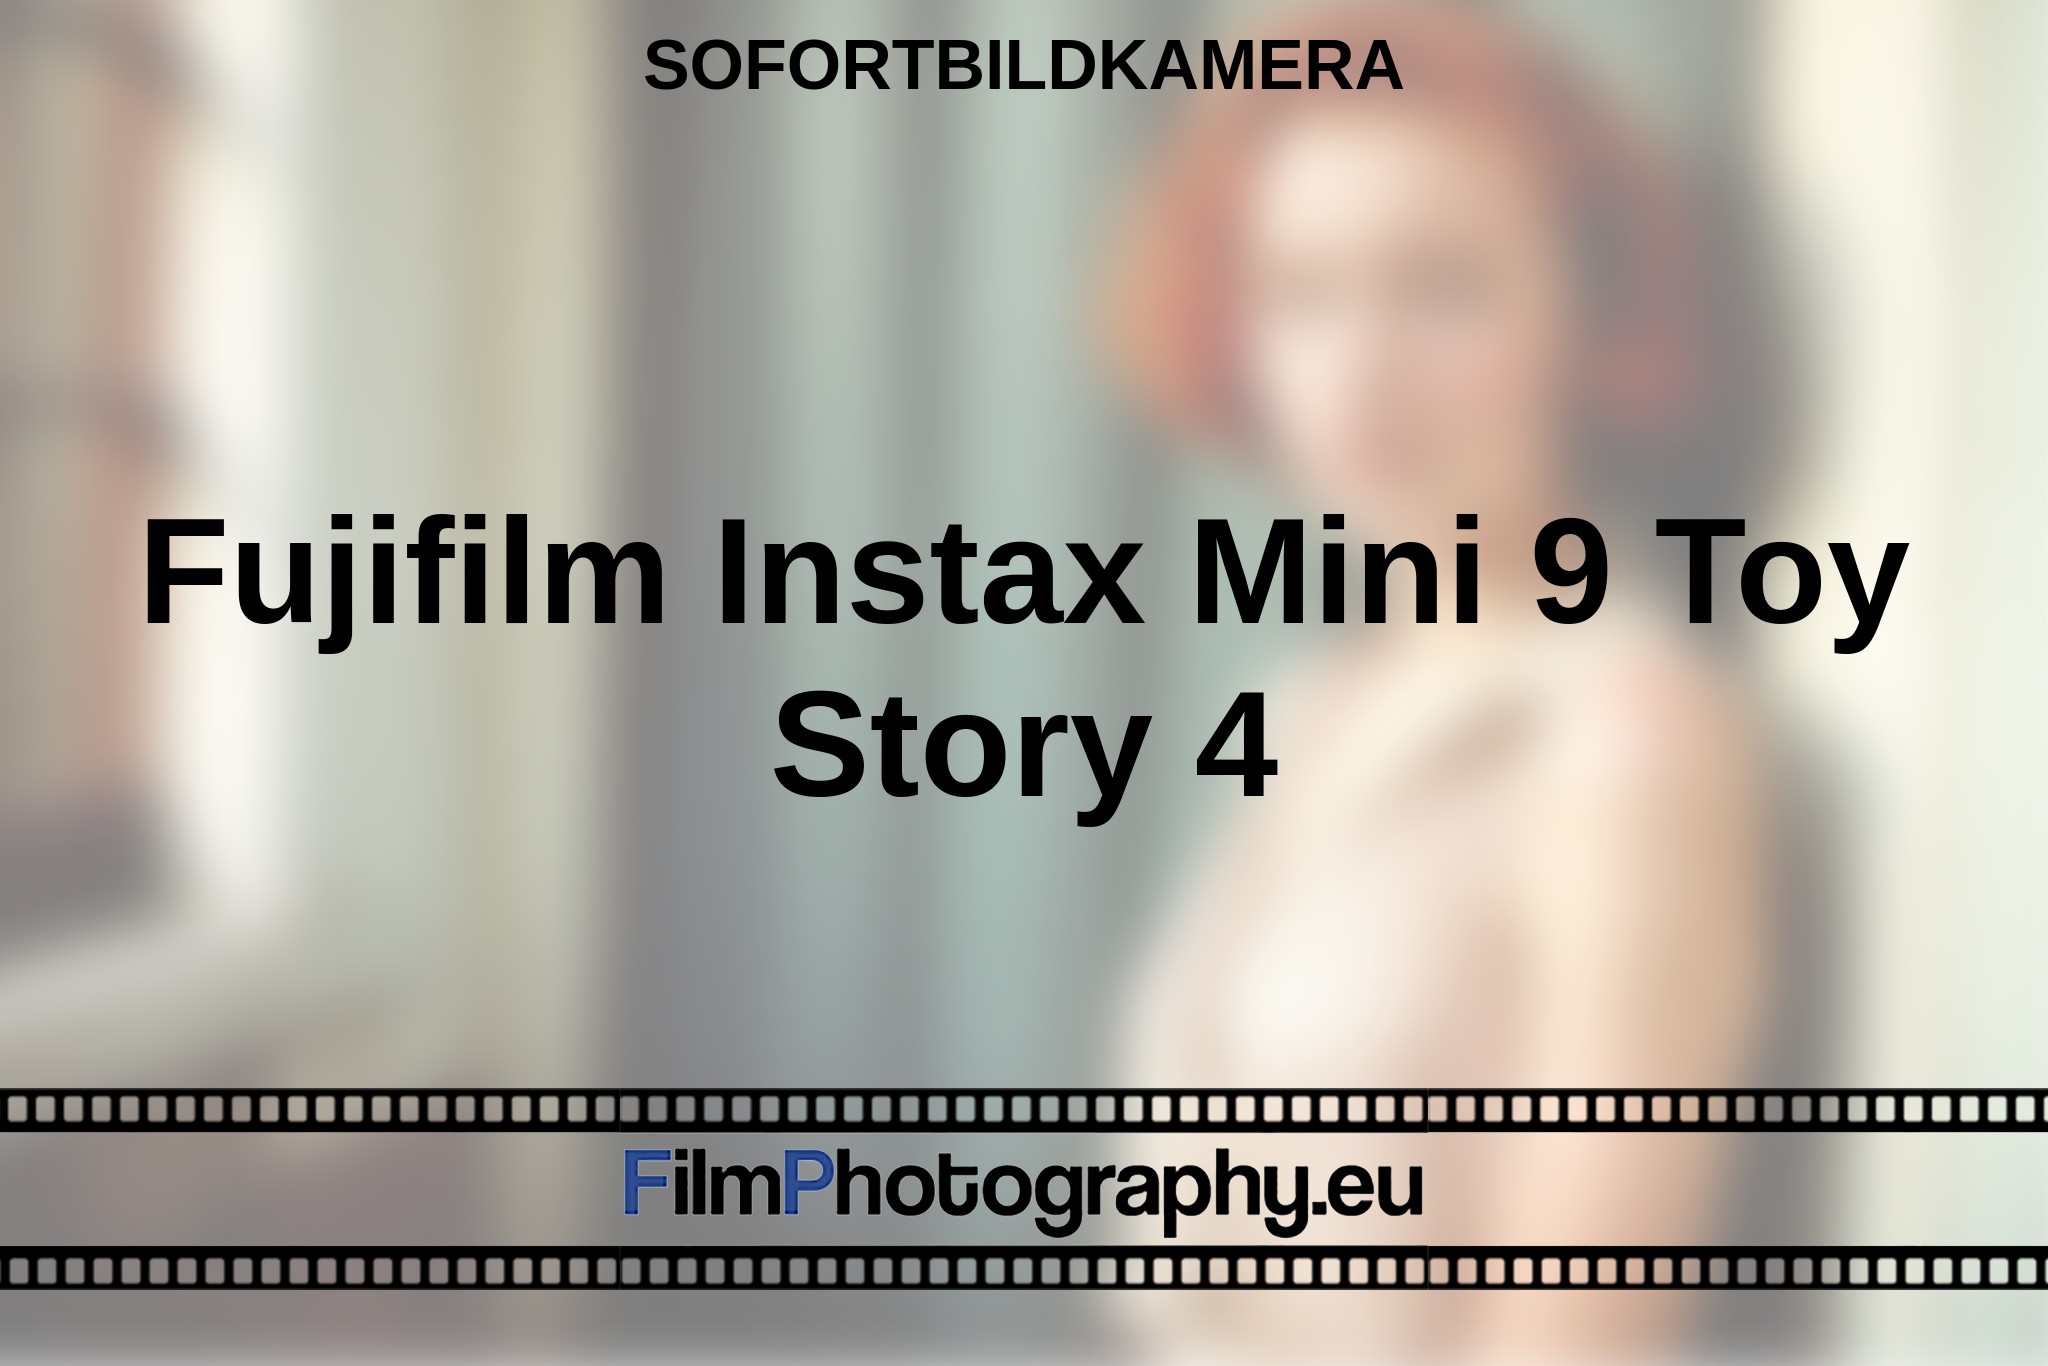 fujifilm-instax-mini-9-toy-story-4-sofortbildkamera-bnv.jpg